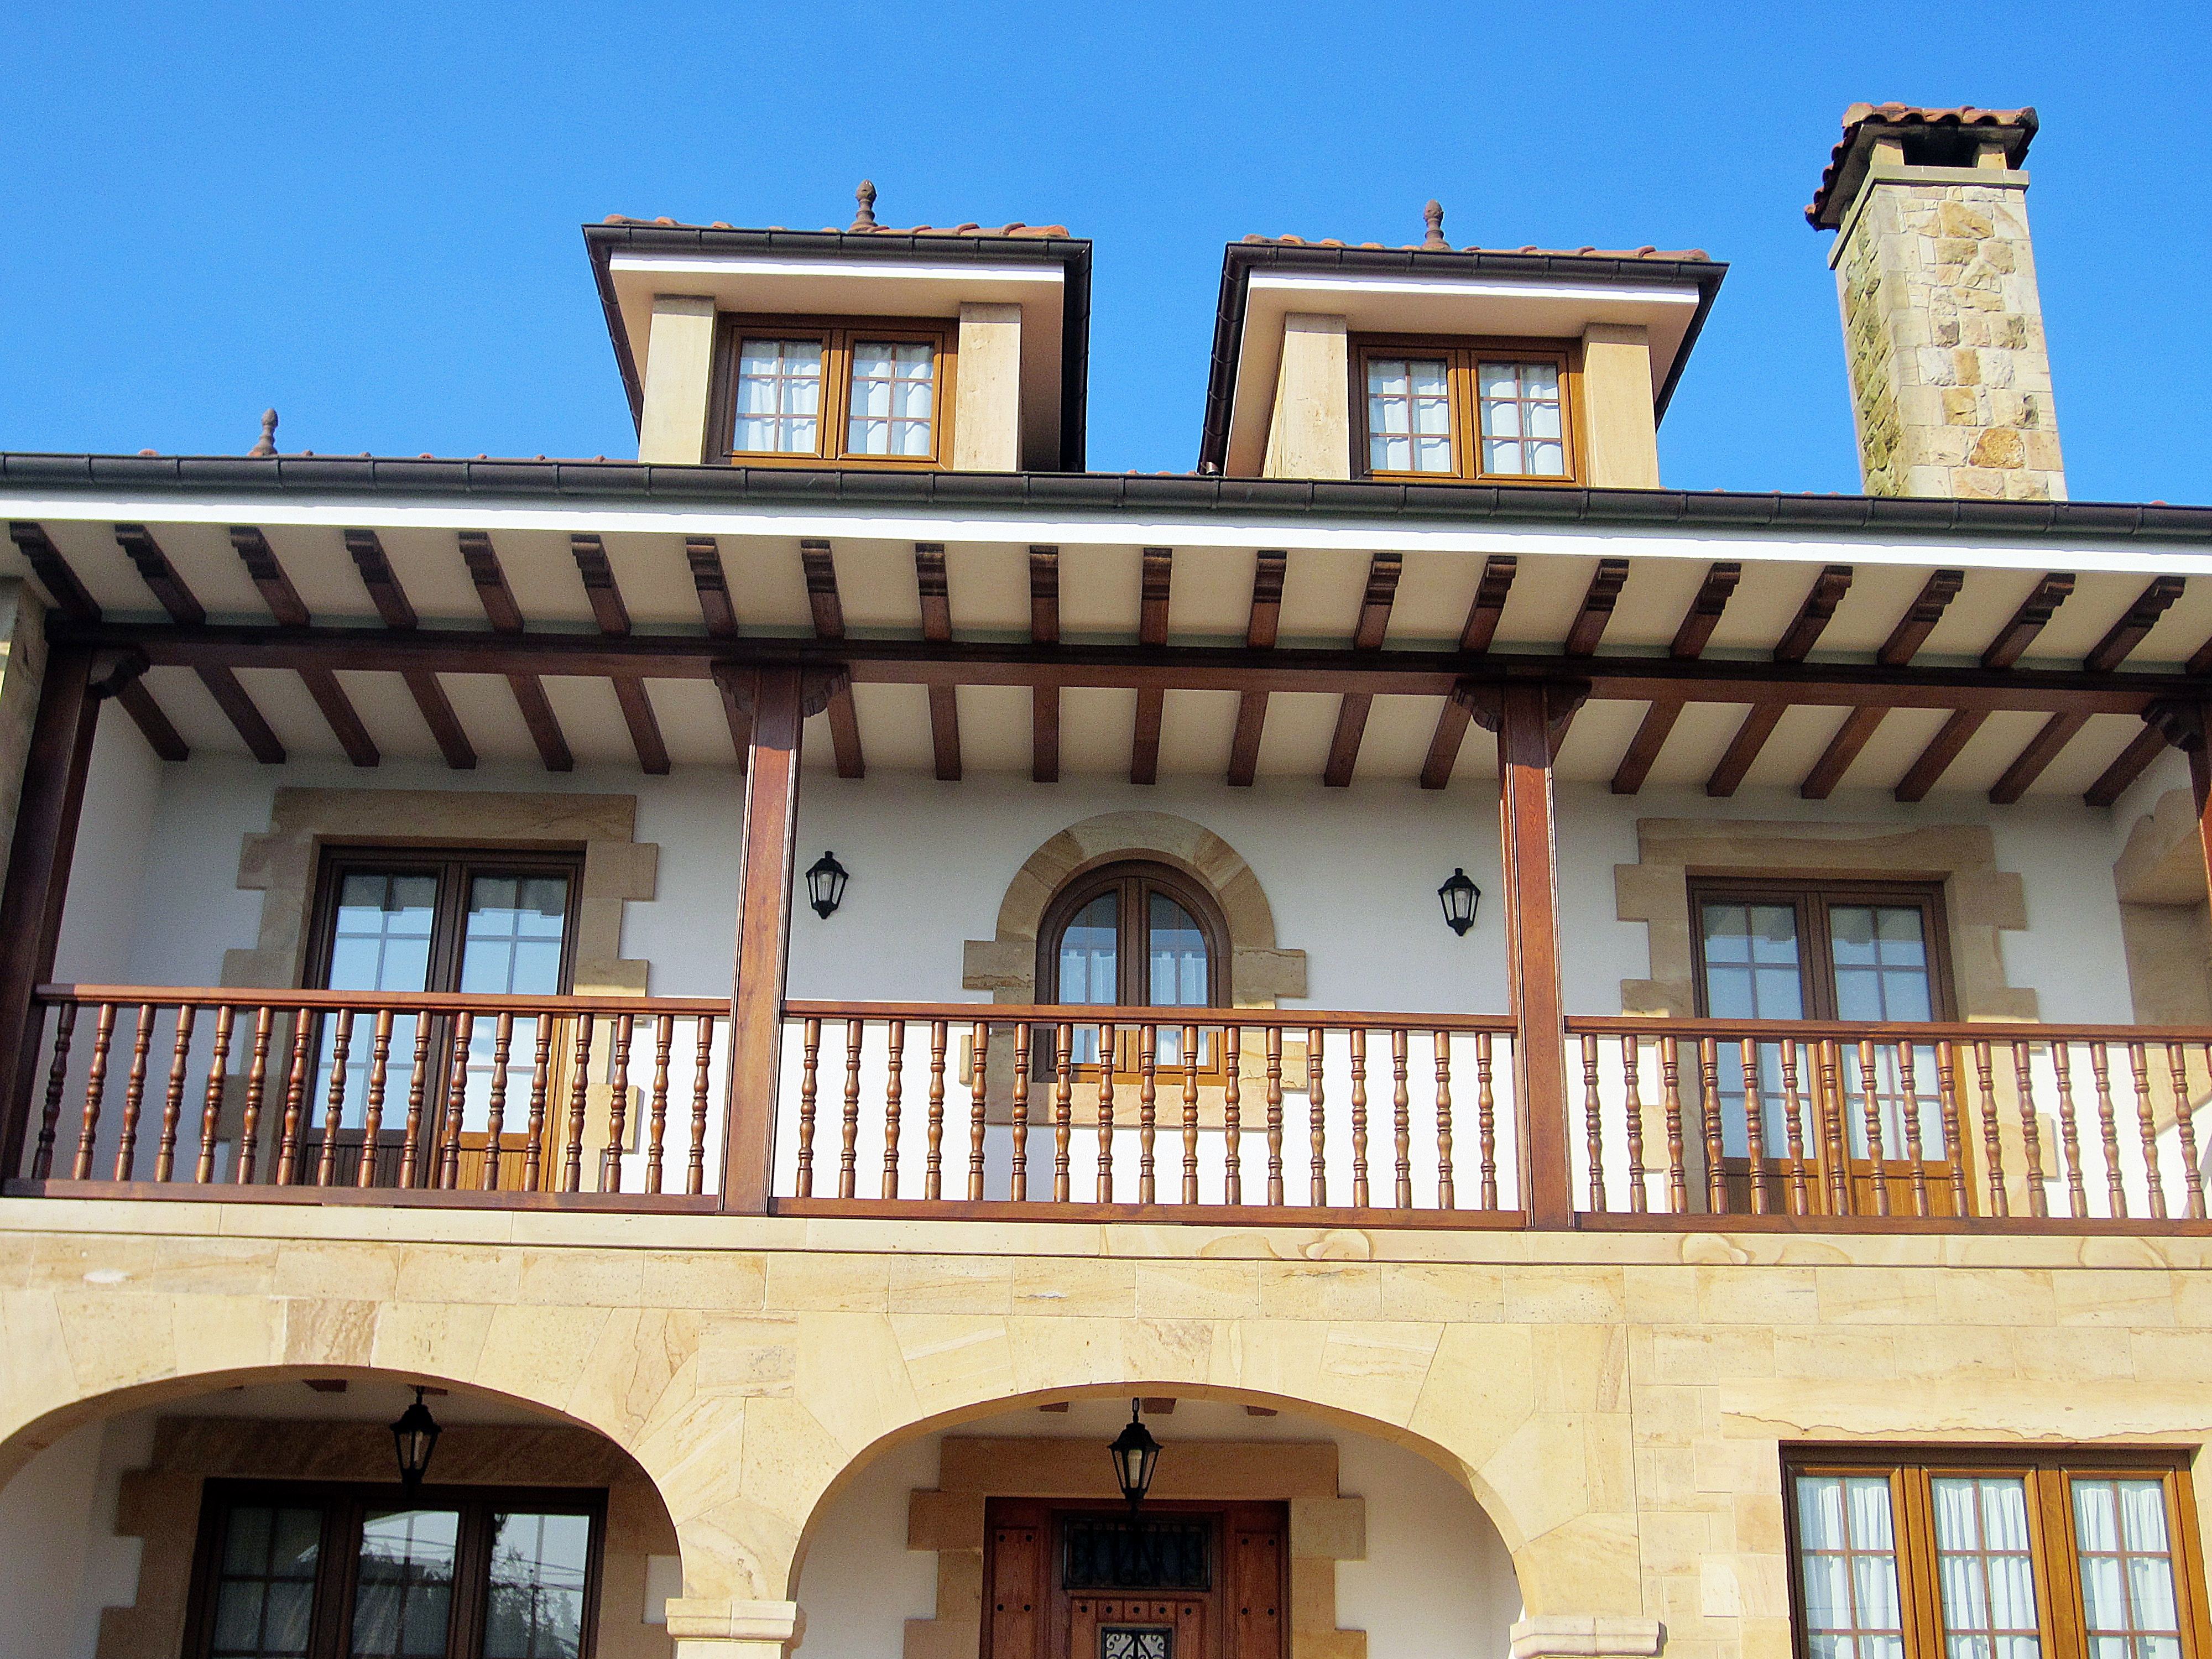 detalle-balcon-madera-casa-pedrec3b1a.jpg